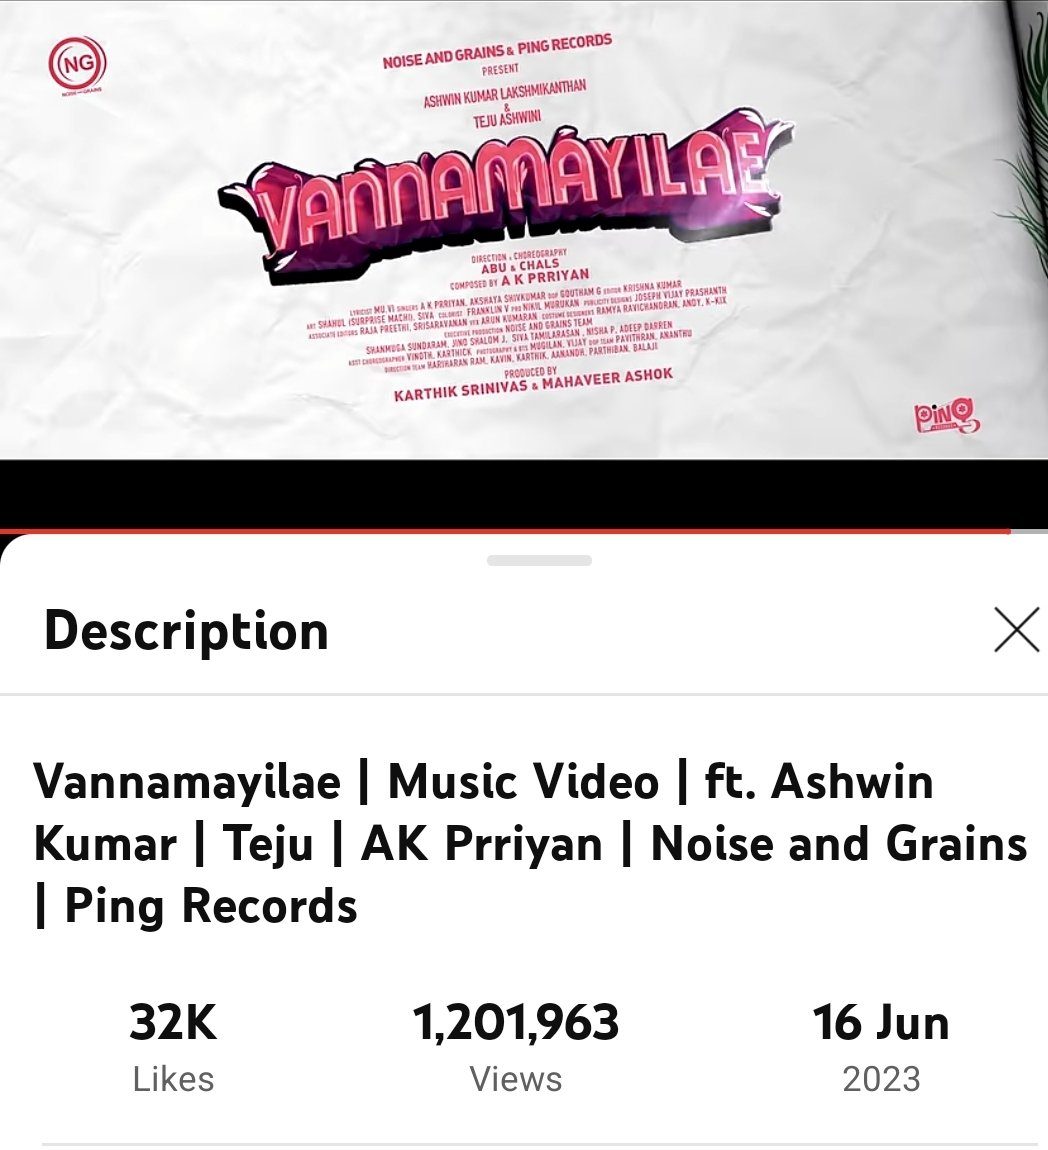 Streaming #Vannamayilae
#Ashwinkumar